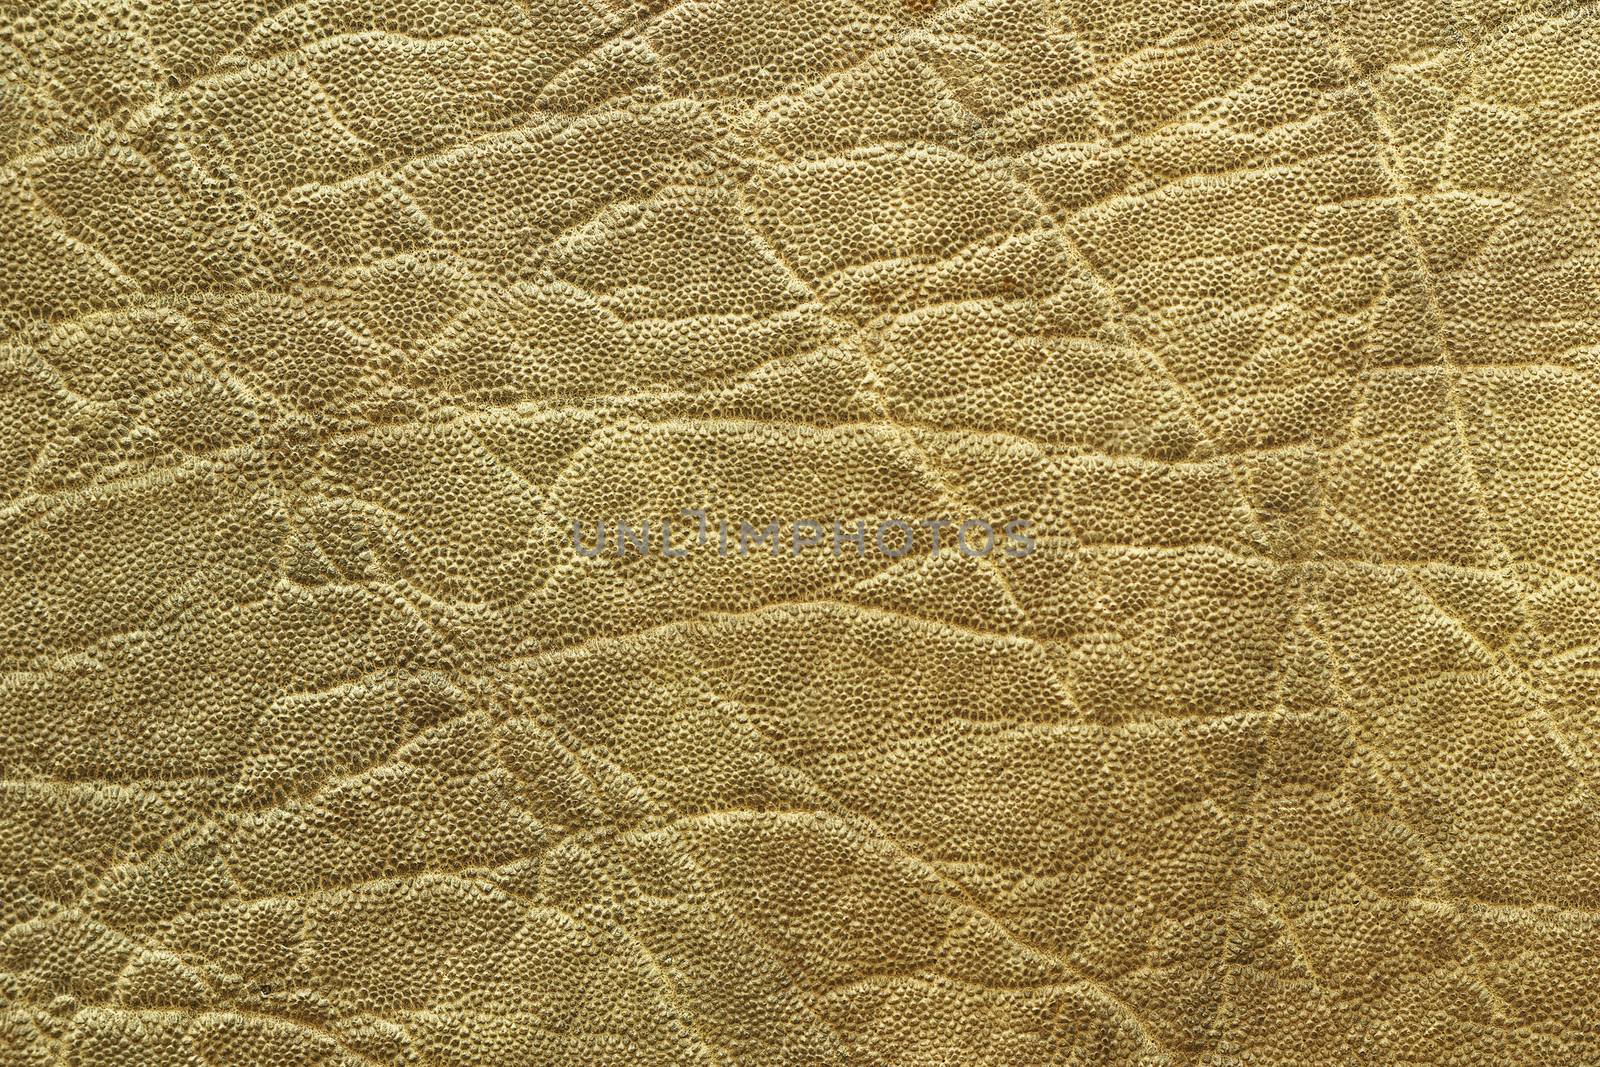 detailed elephant pelt texture by taviphoto